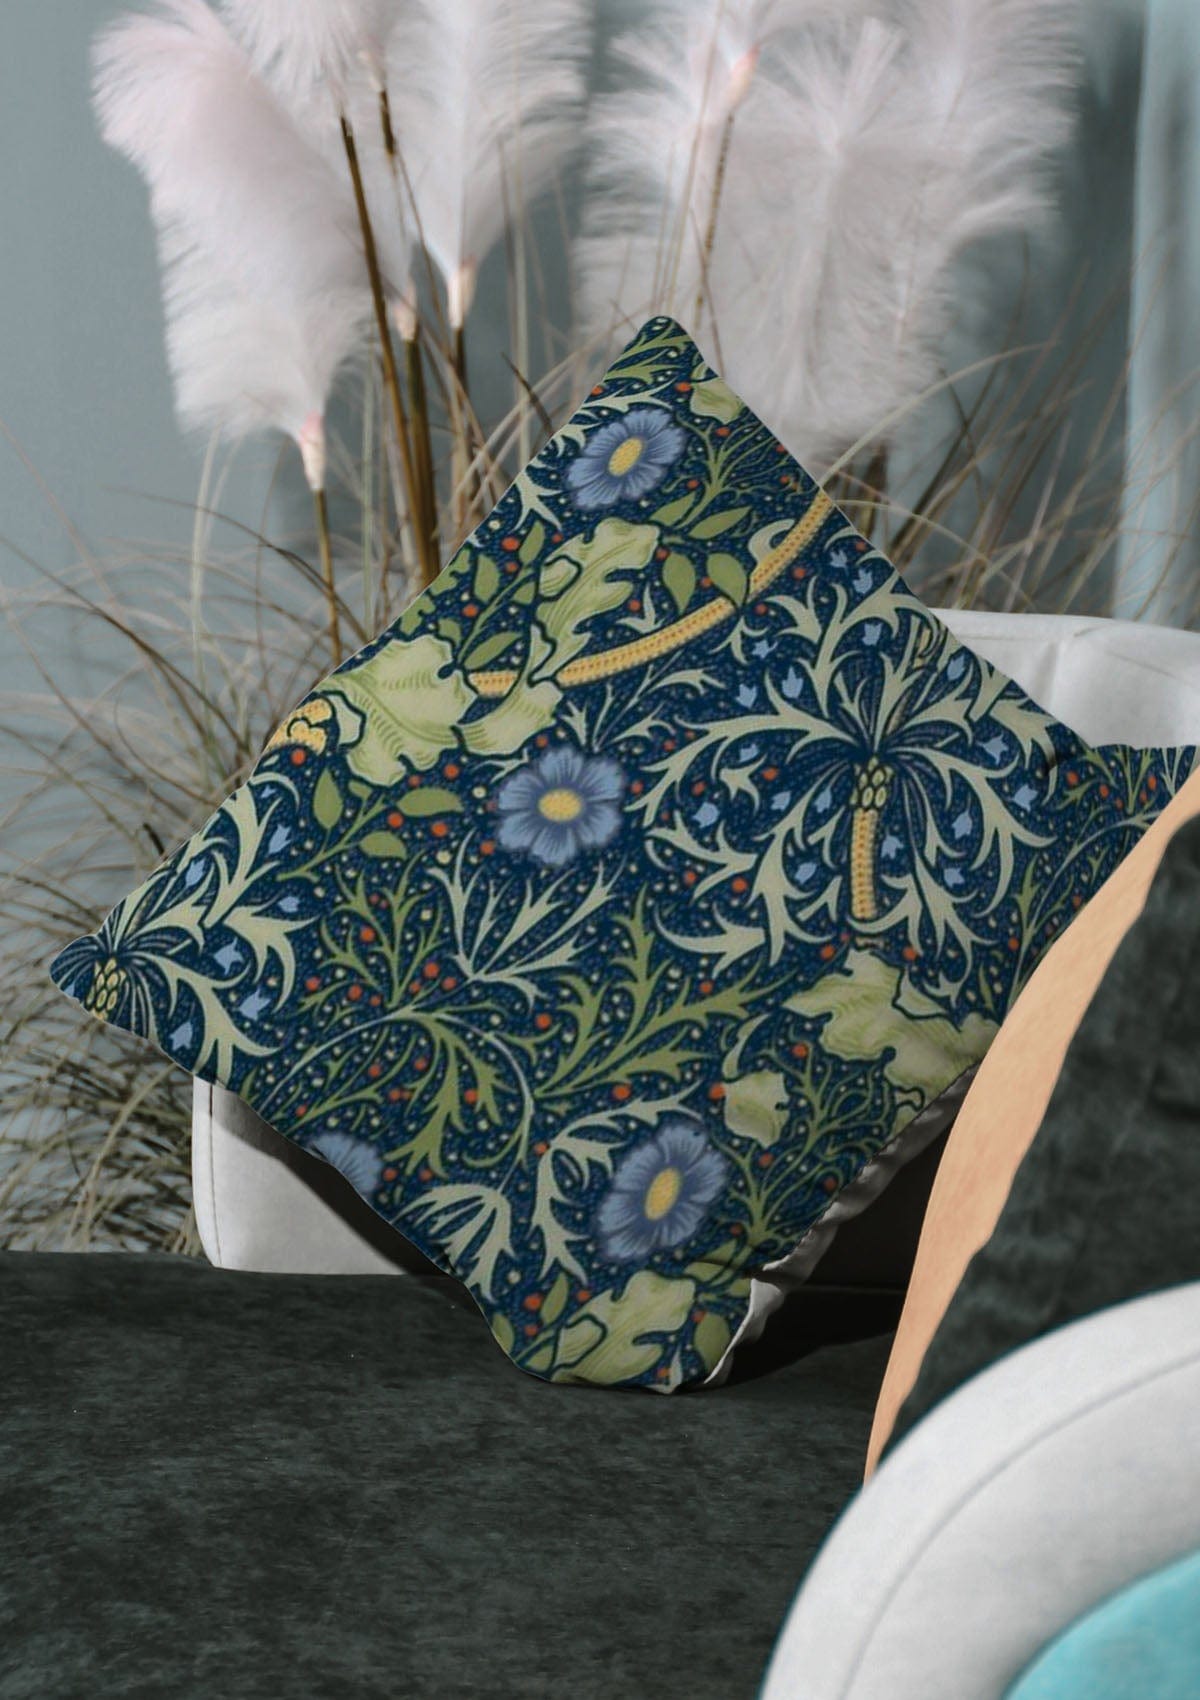 Luxury Cushion Cover linen velvet floral cream greens blues quality